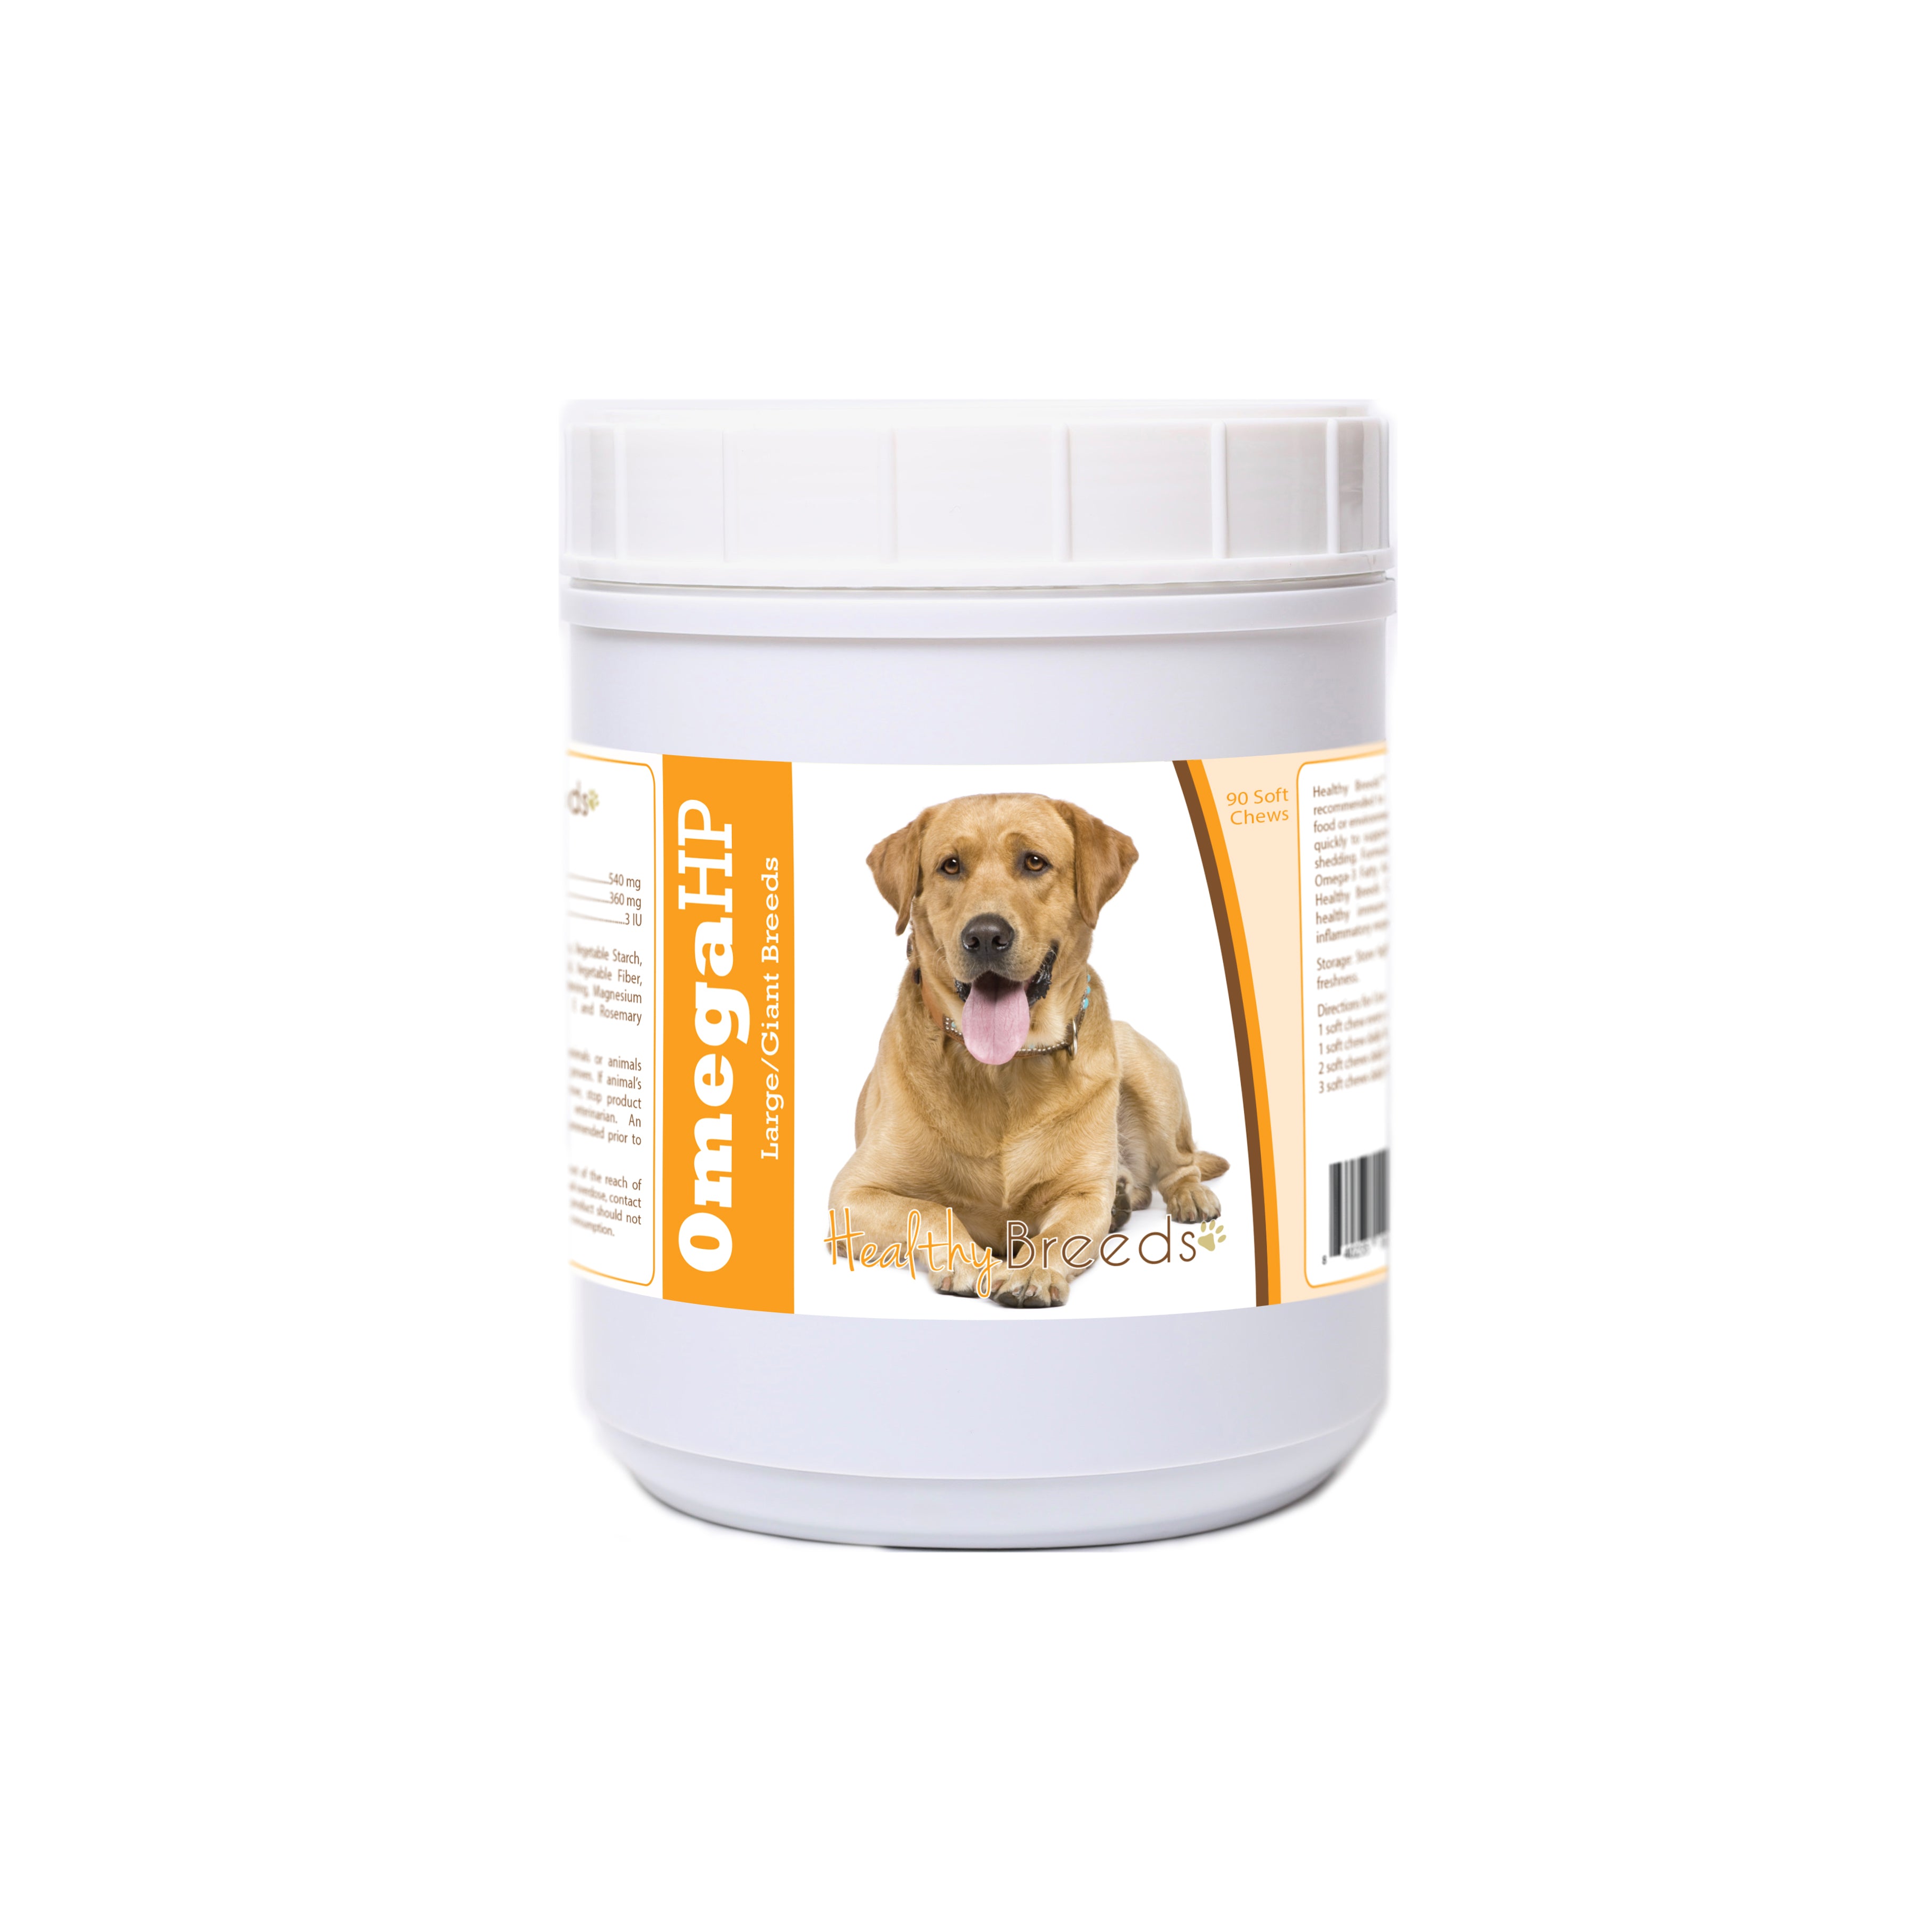 Labrador Retriever Omega HP Fatty Acid Skin and Coat Support Soft Chews 90 Count